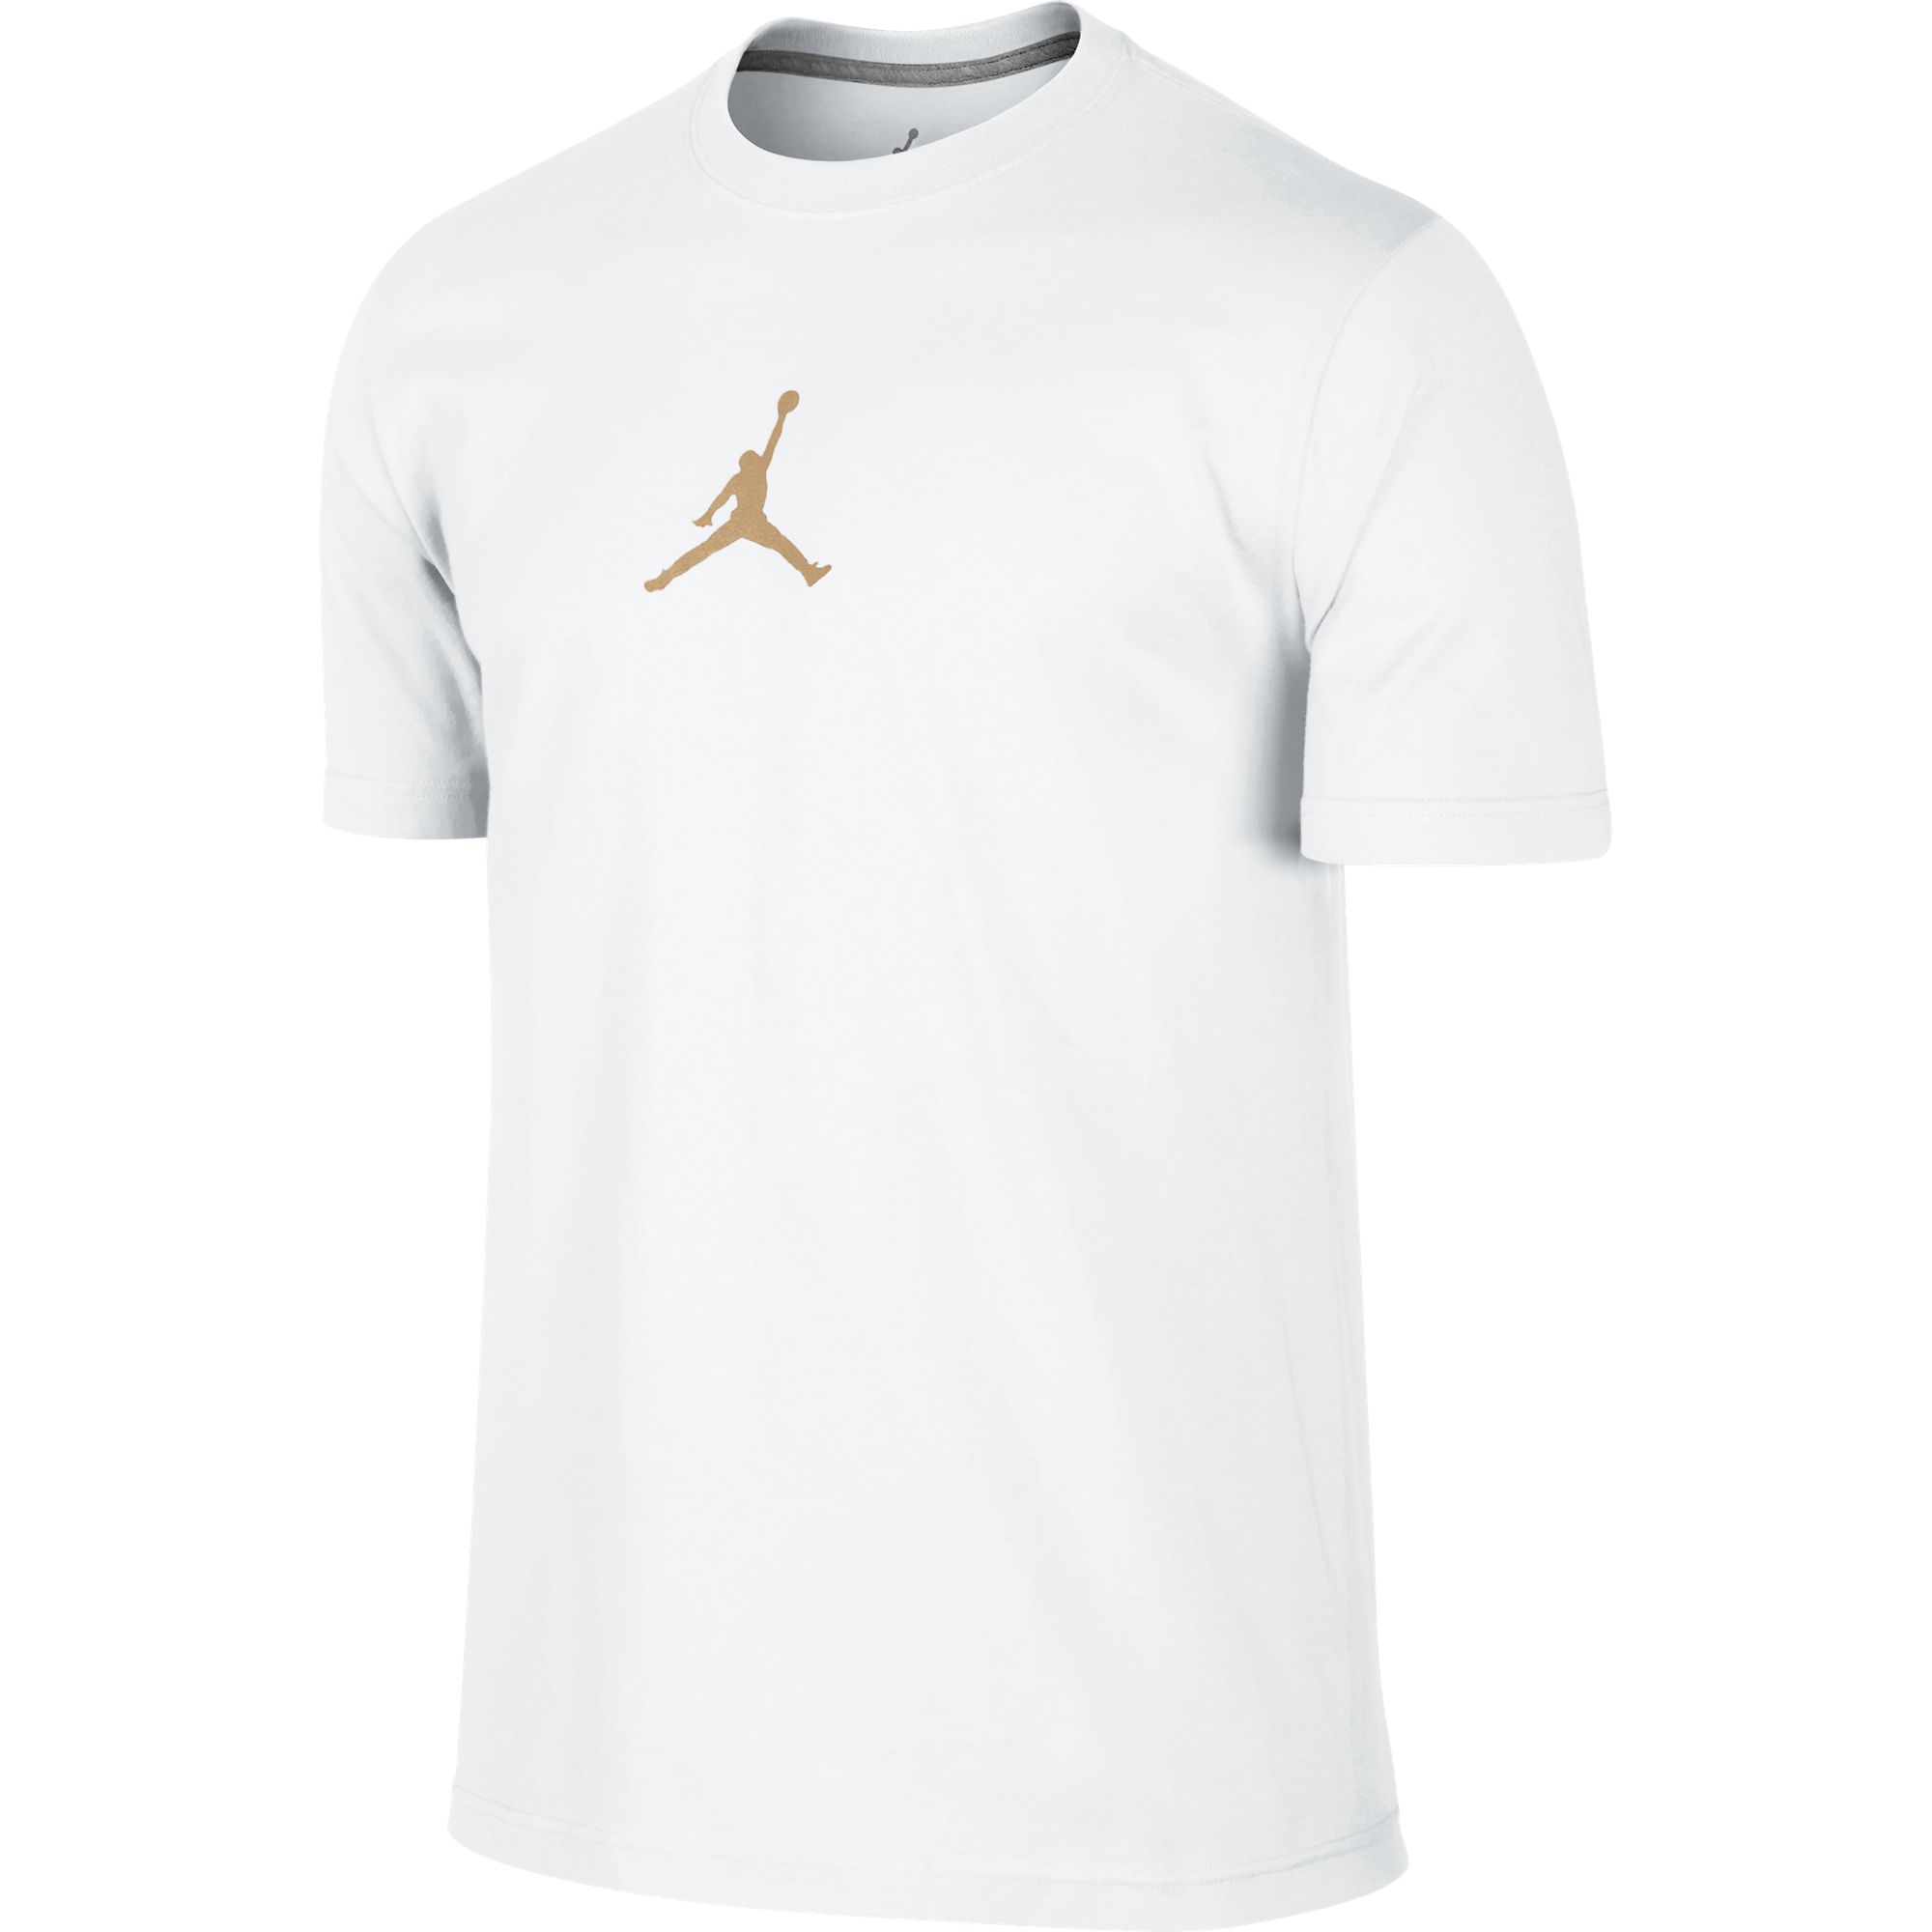 Jordan 23/7 Jumpman Logo Printed Men's T-Shirt White/Gold 612198-102 | eBay